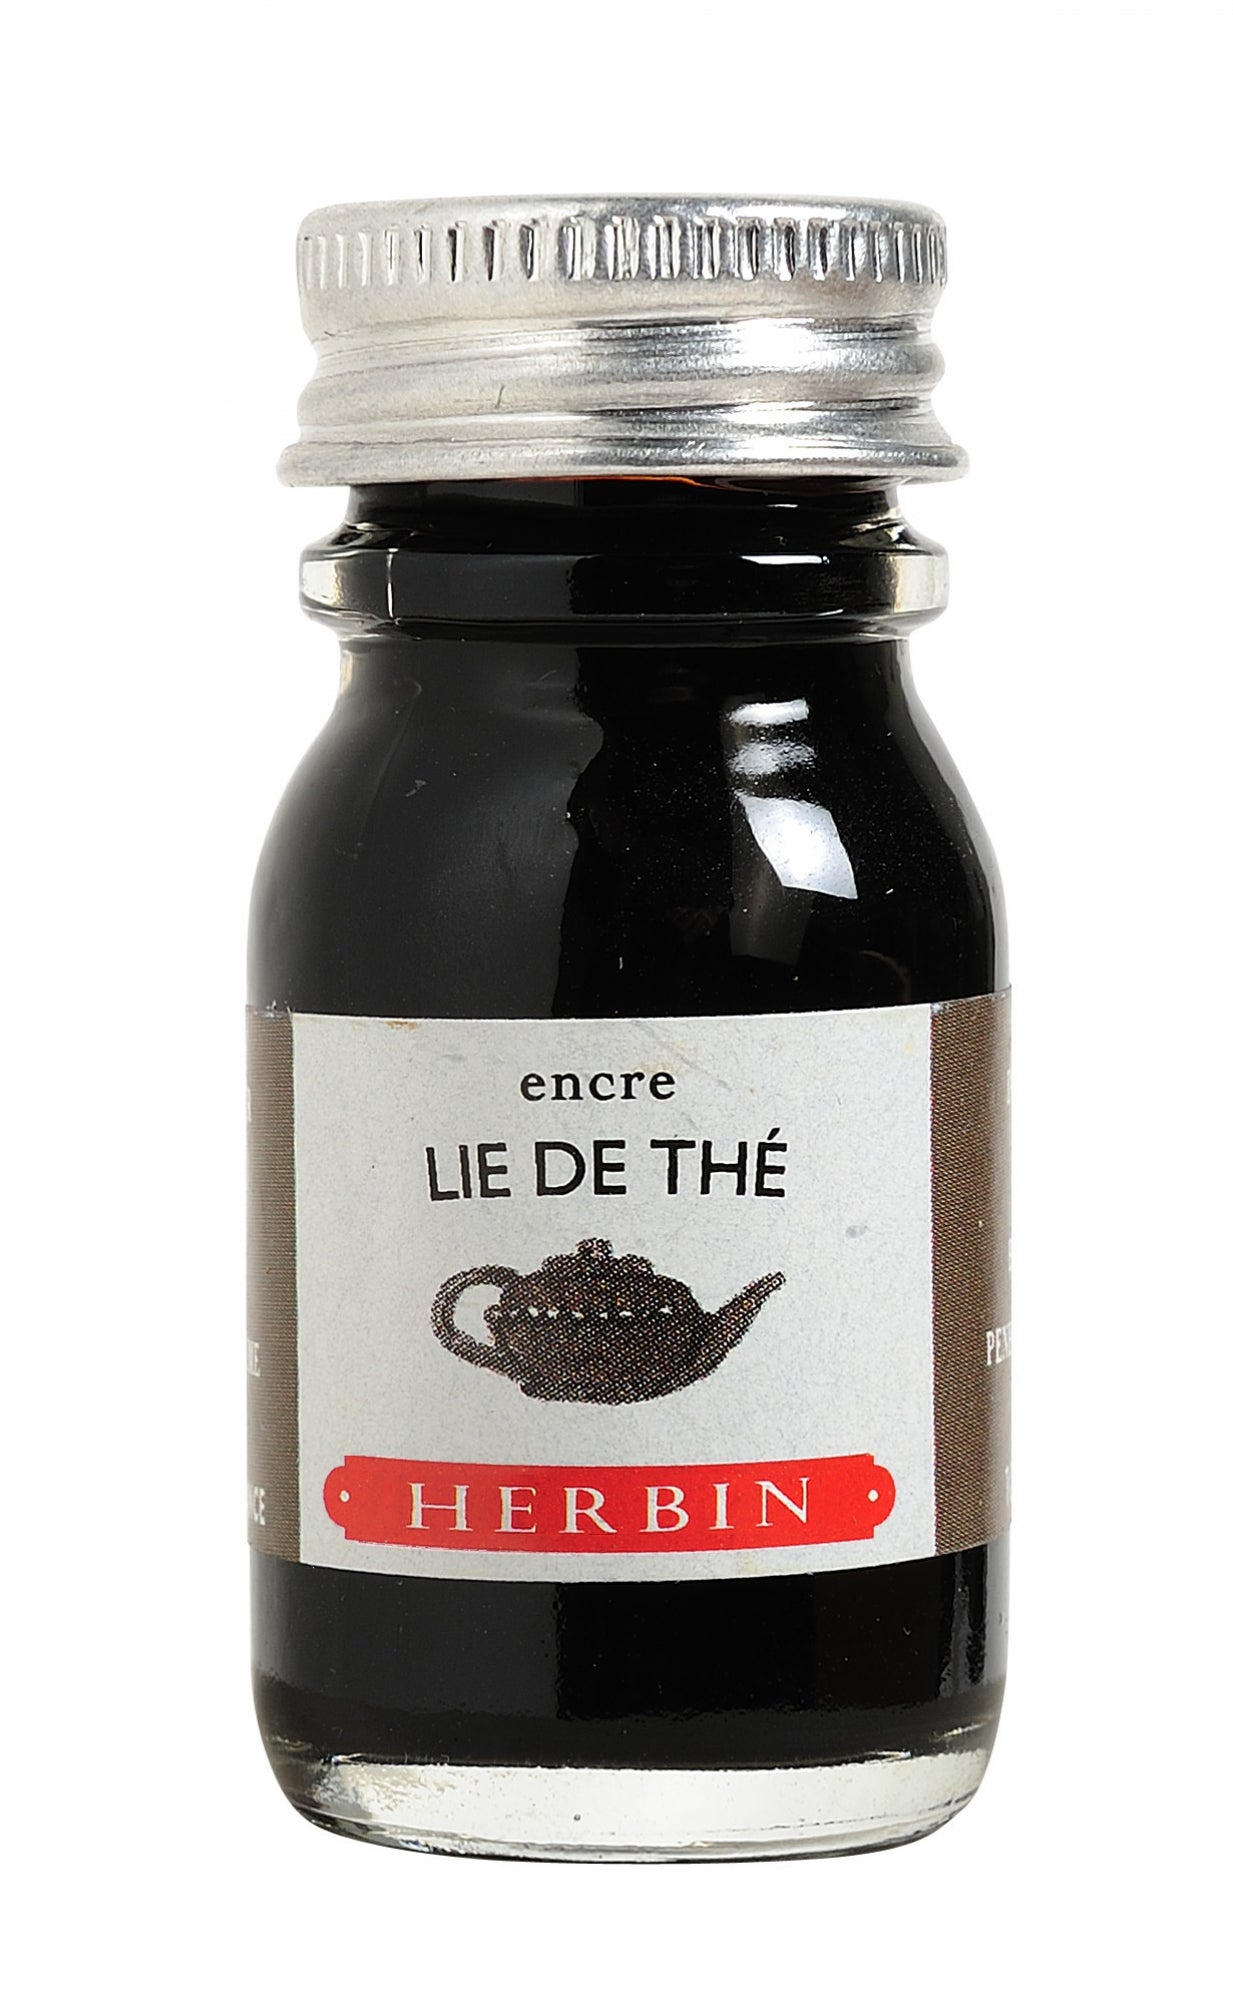 J Herbin Lie de Thé